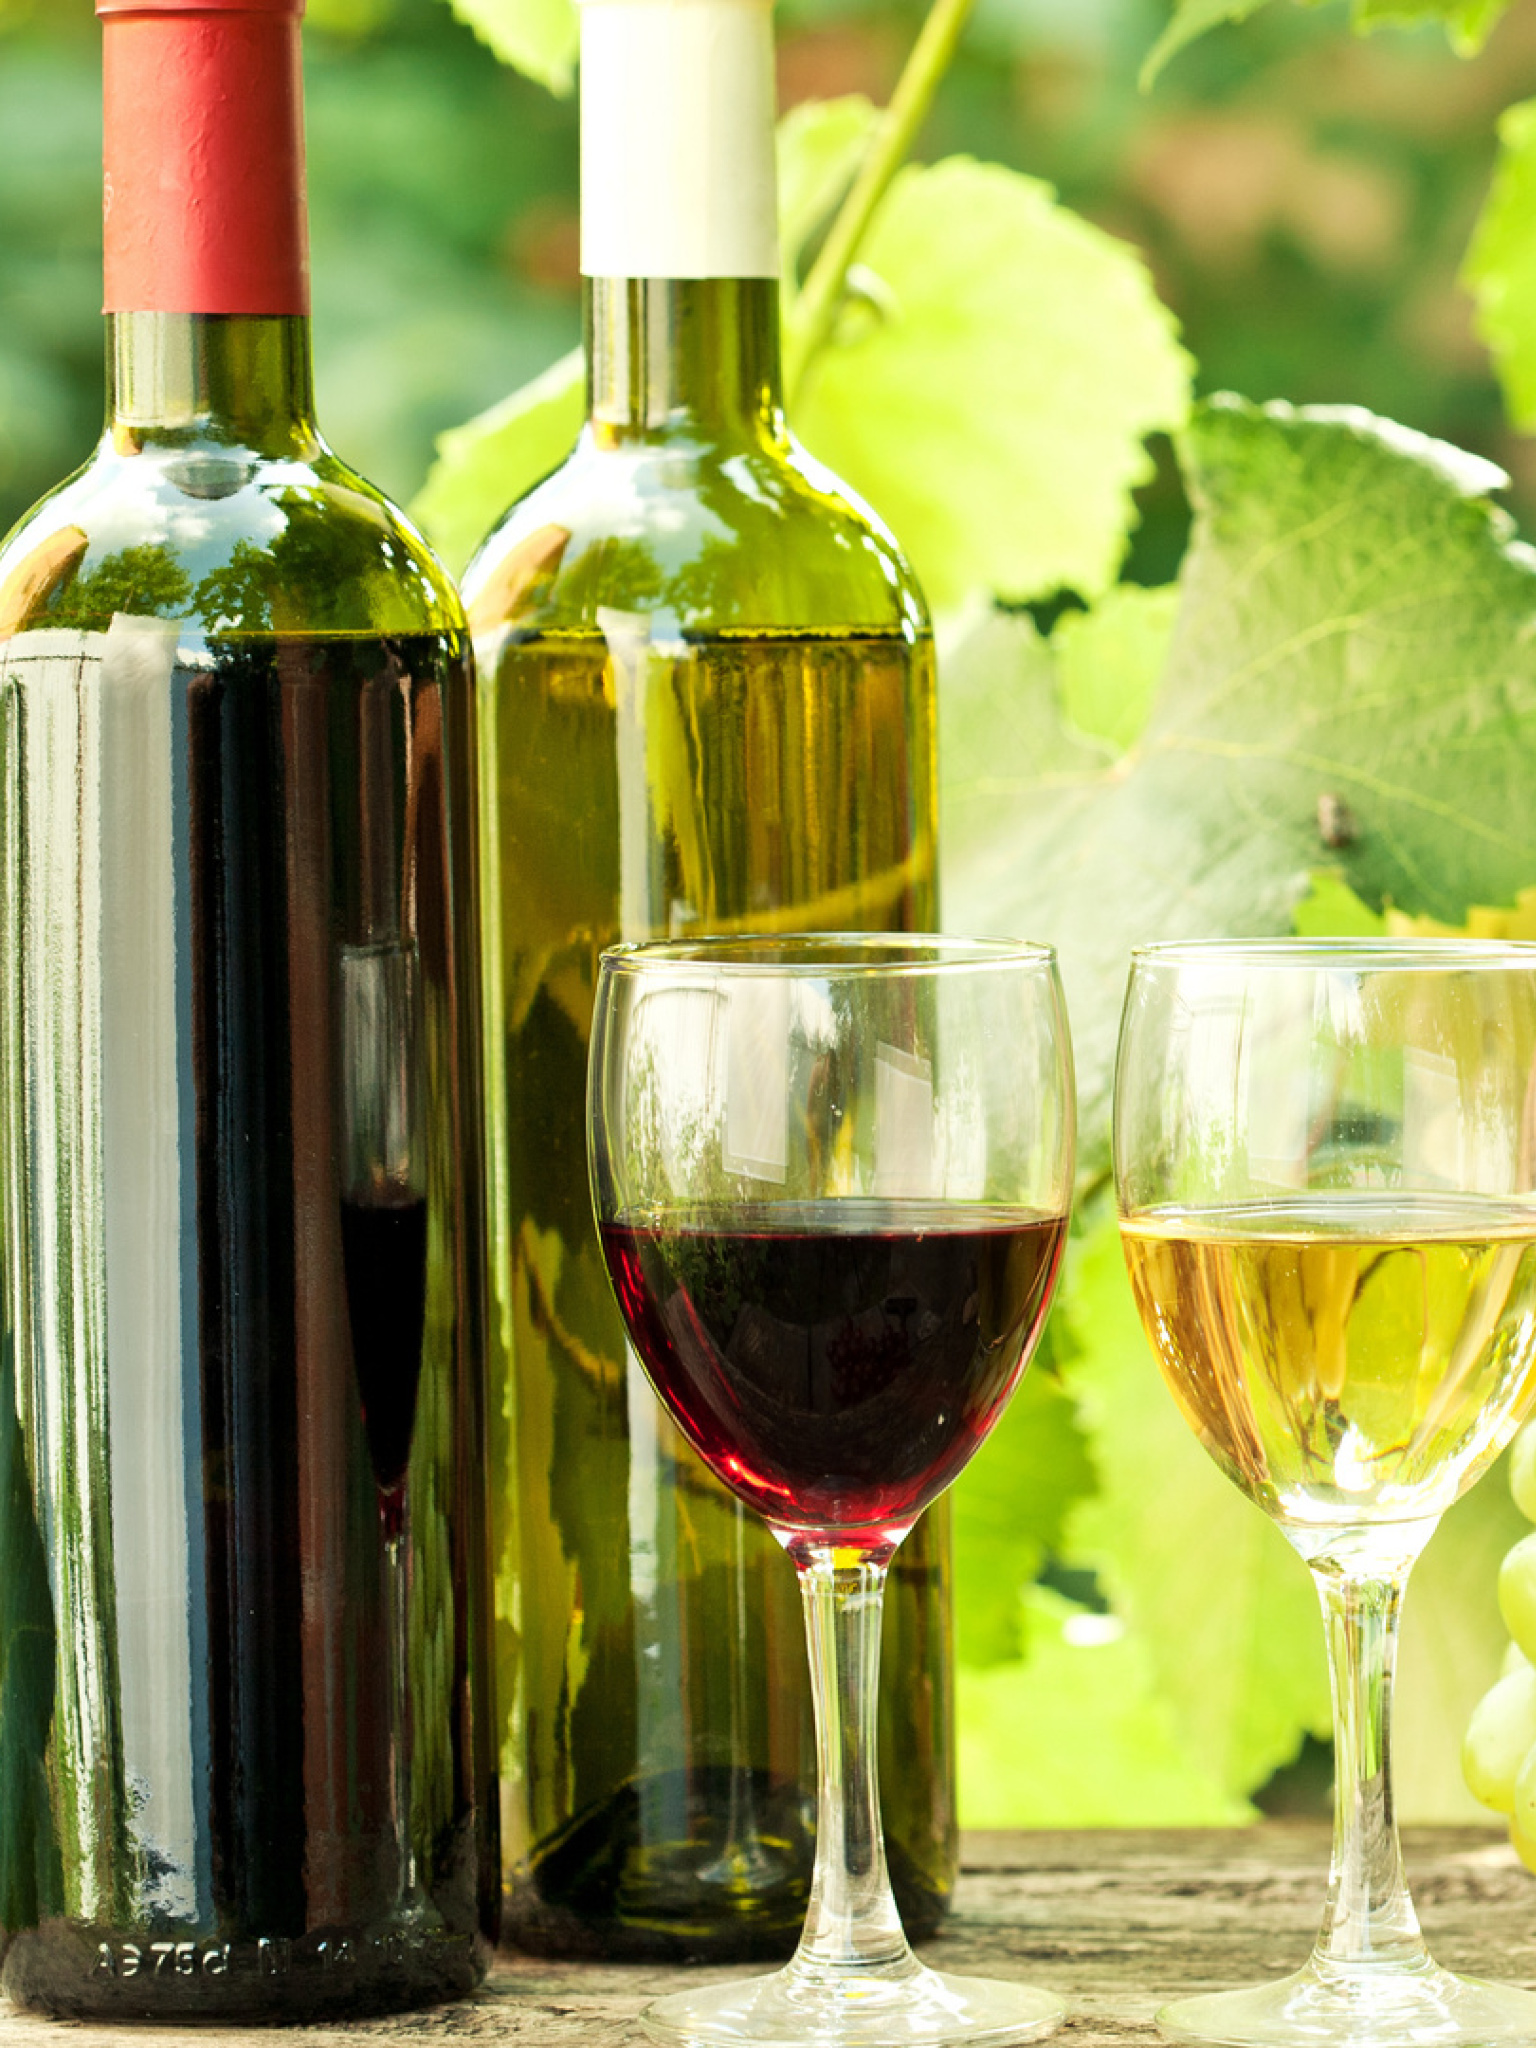 Виноград вино сканворд. Виноградники вино. Итальянское вино 6 букв. Вино 4 буквы. Красивая картинка винодельни в ЮАР.